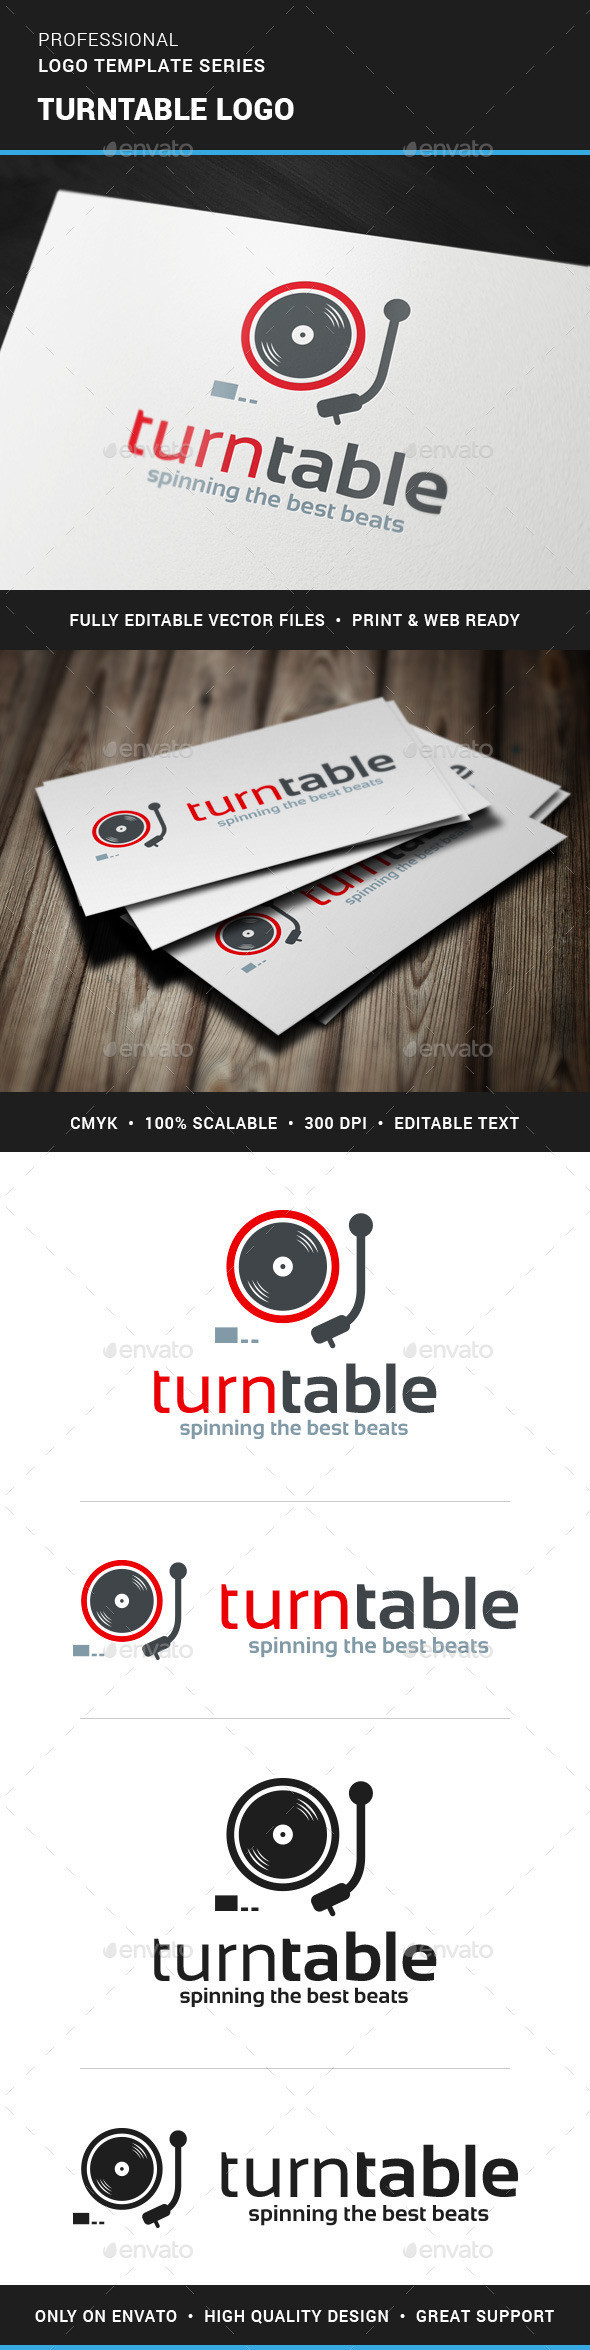 Turntable logo template